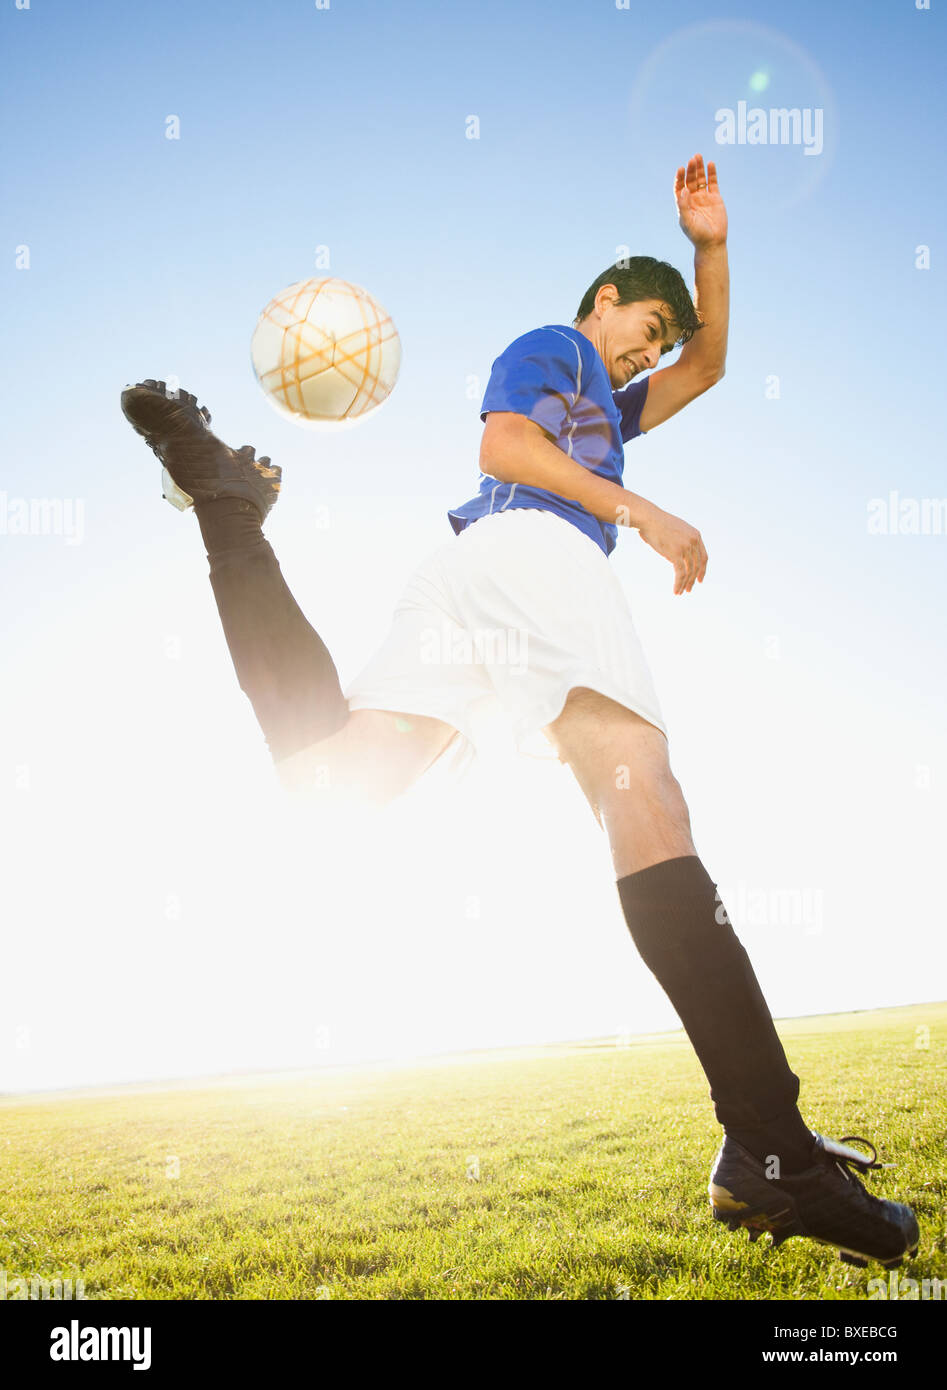 Soccer player kicking saut Banque D'Images